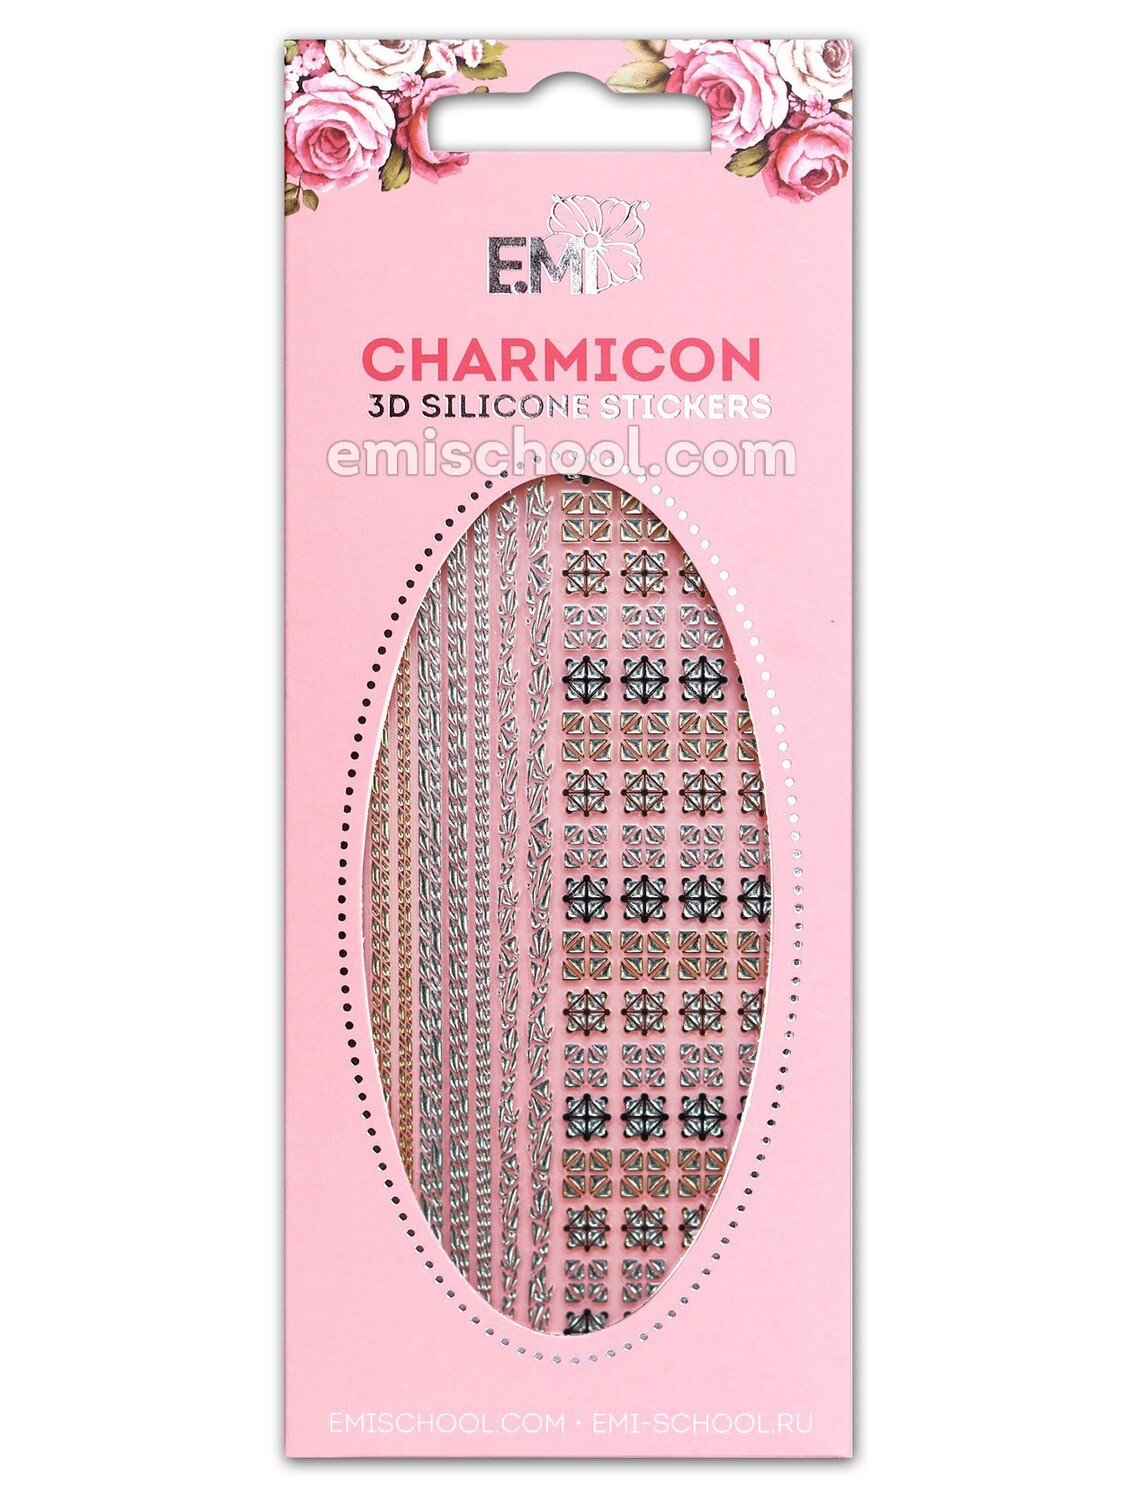 Charmicon 3D Silicone Stickers #78 Chain